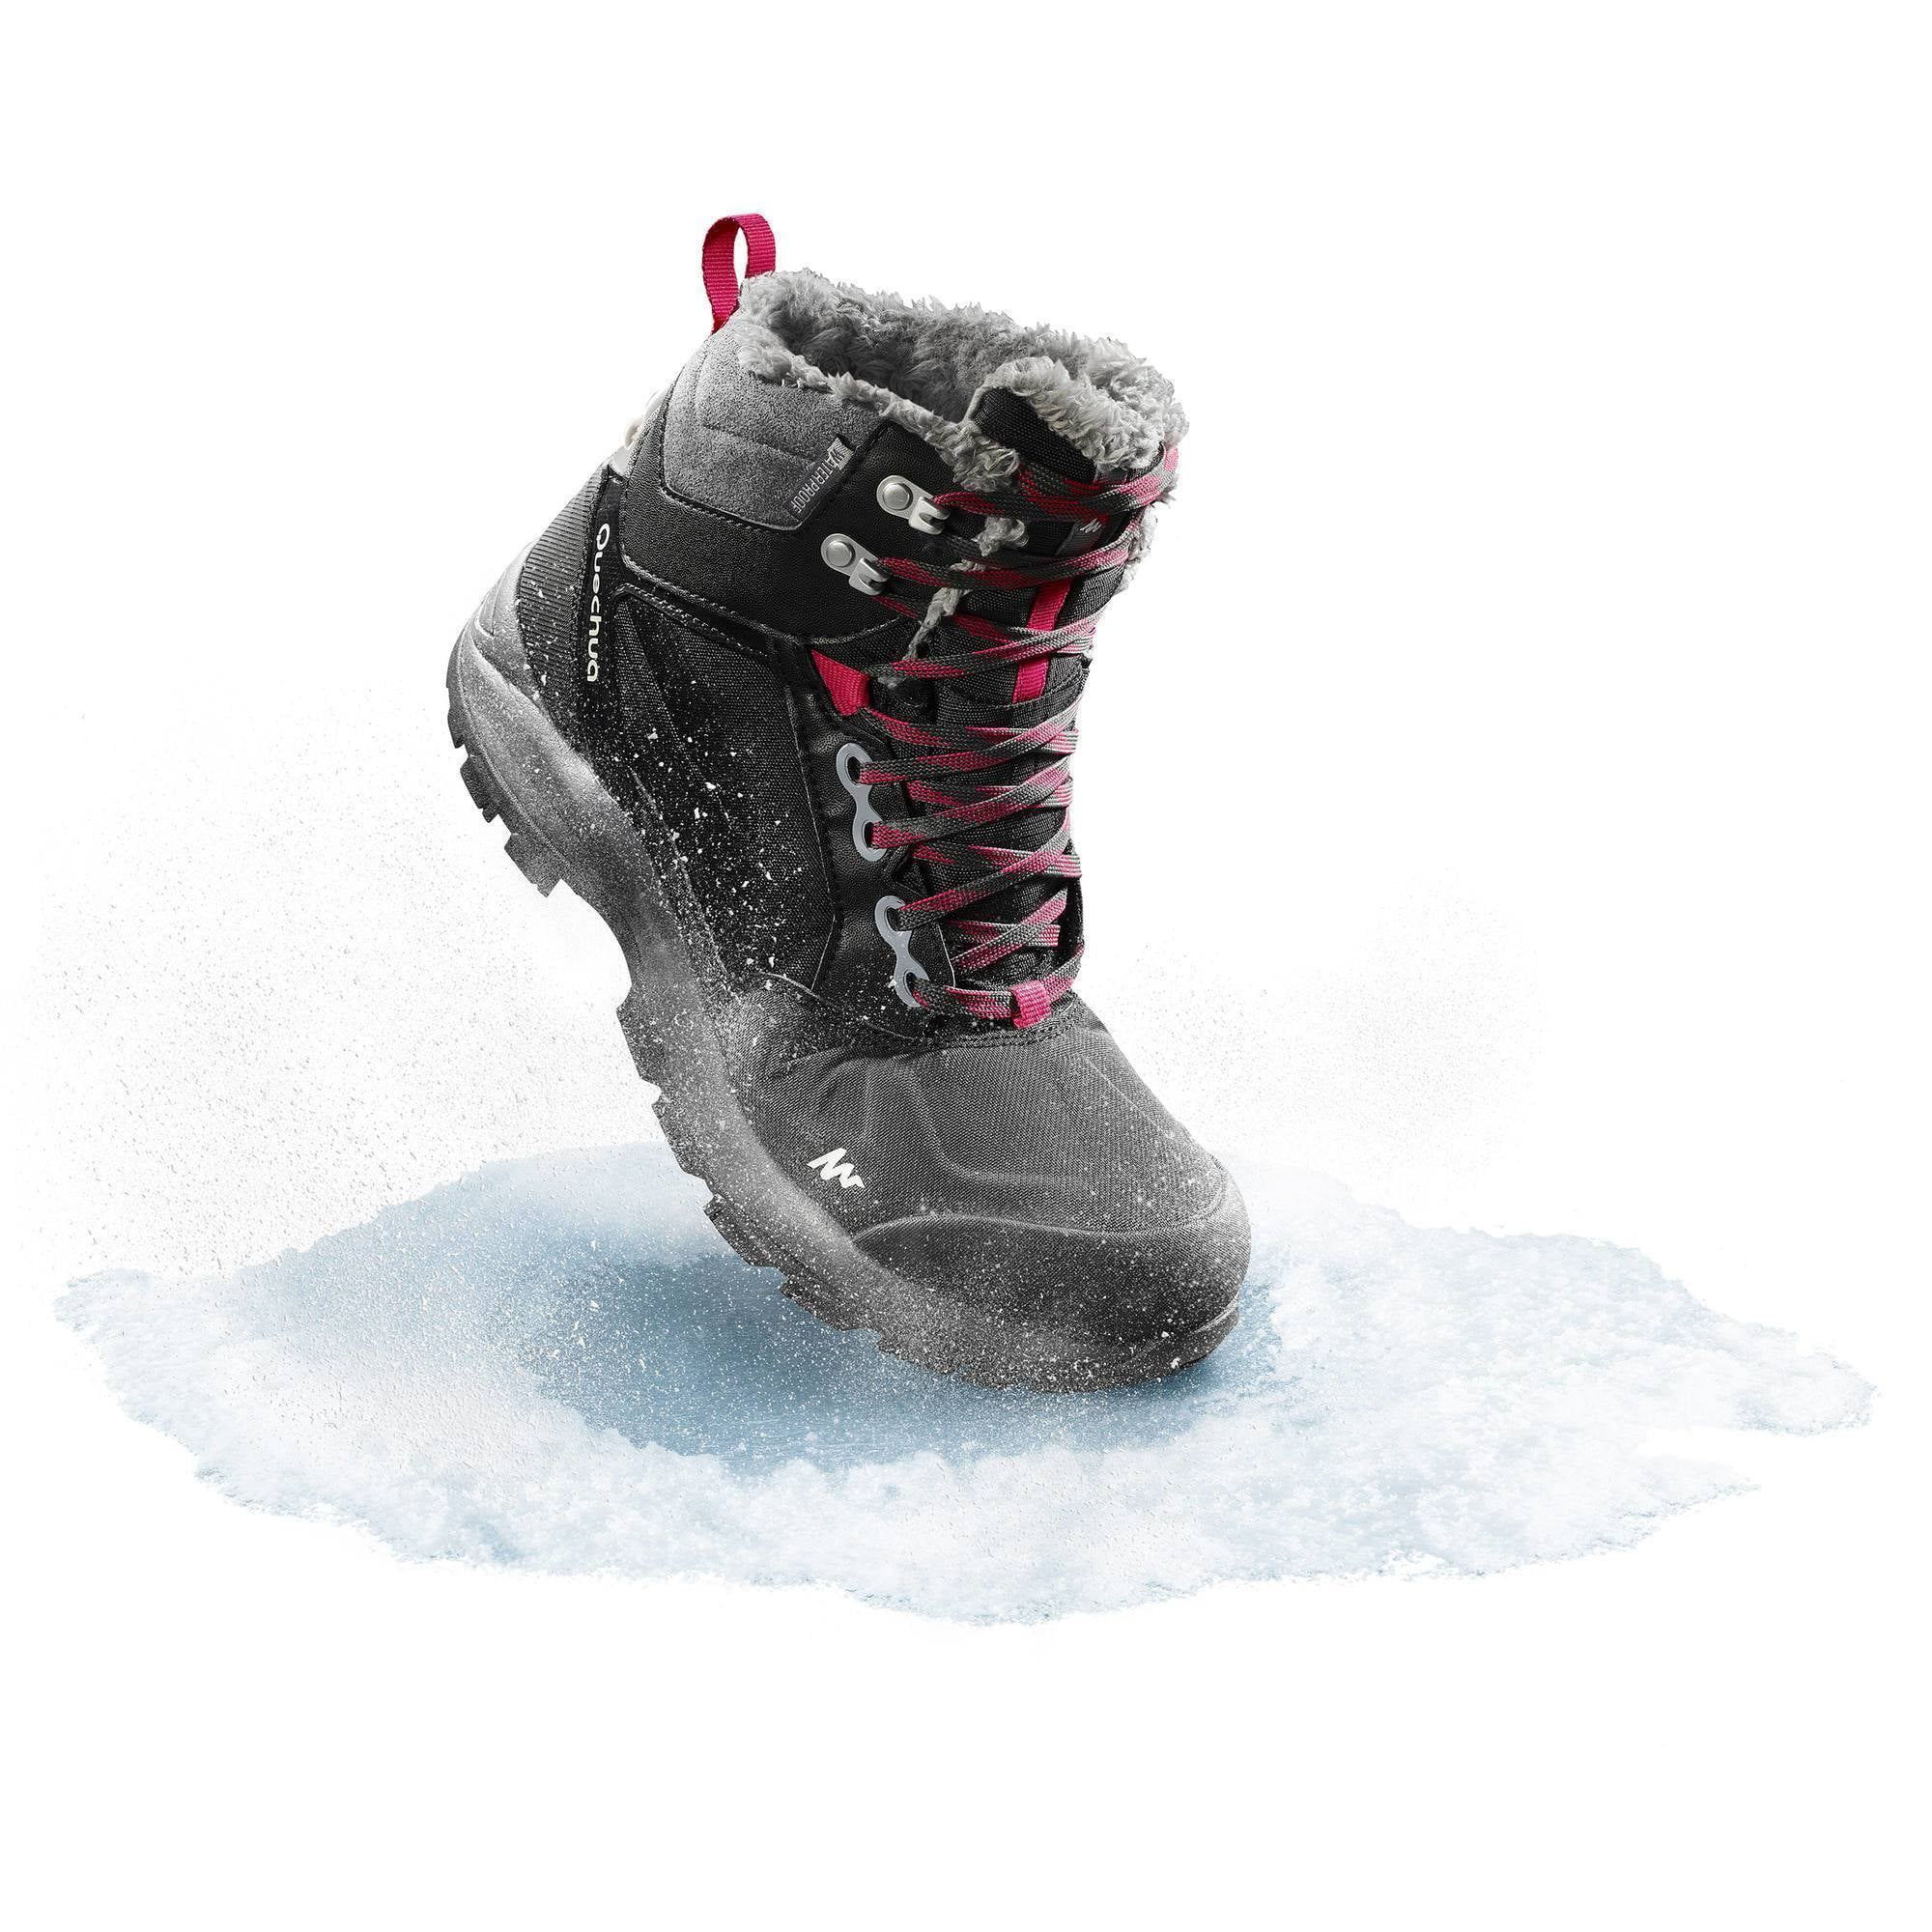 decathlon women's snow boots